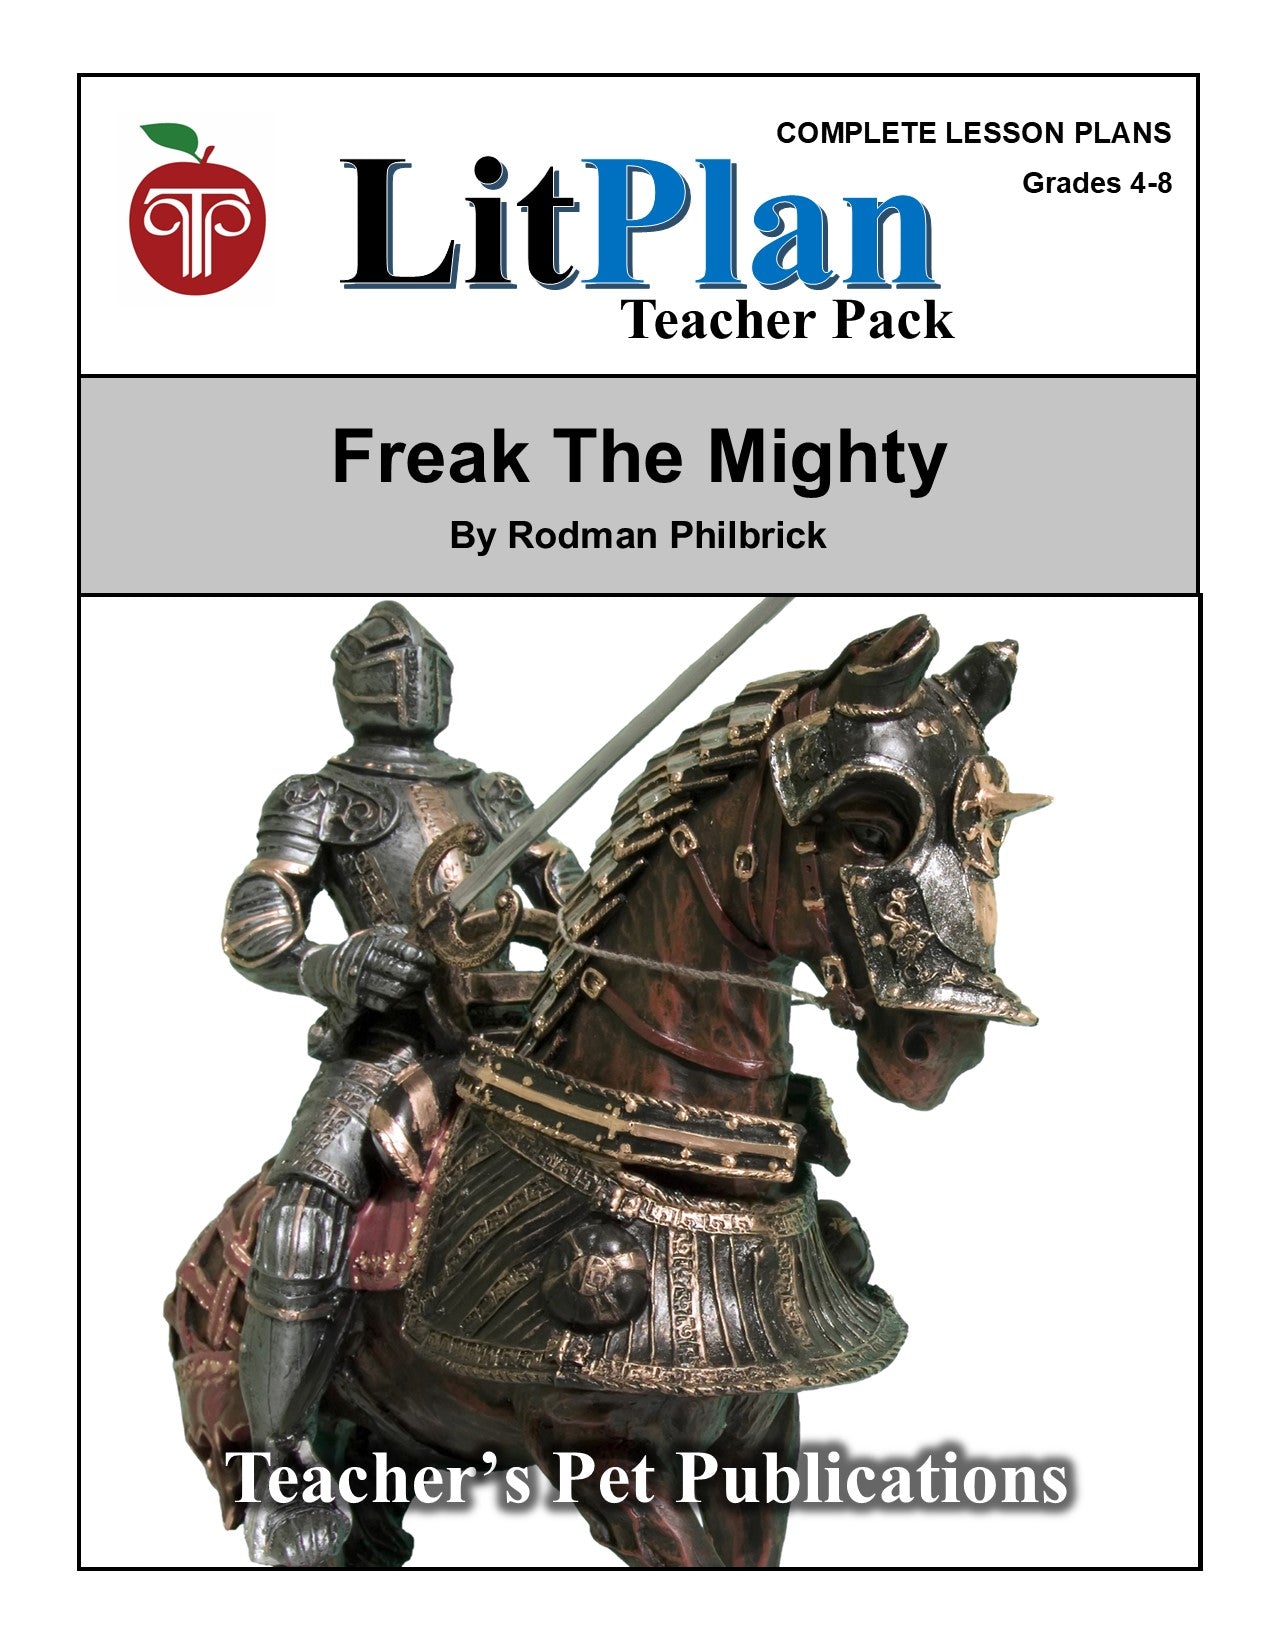 Freak the Mighty: LitPlan Teacher Pack Grades 4-8